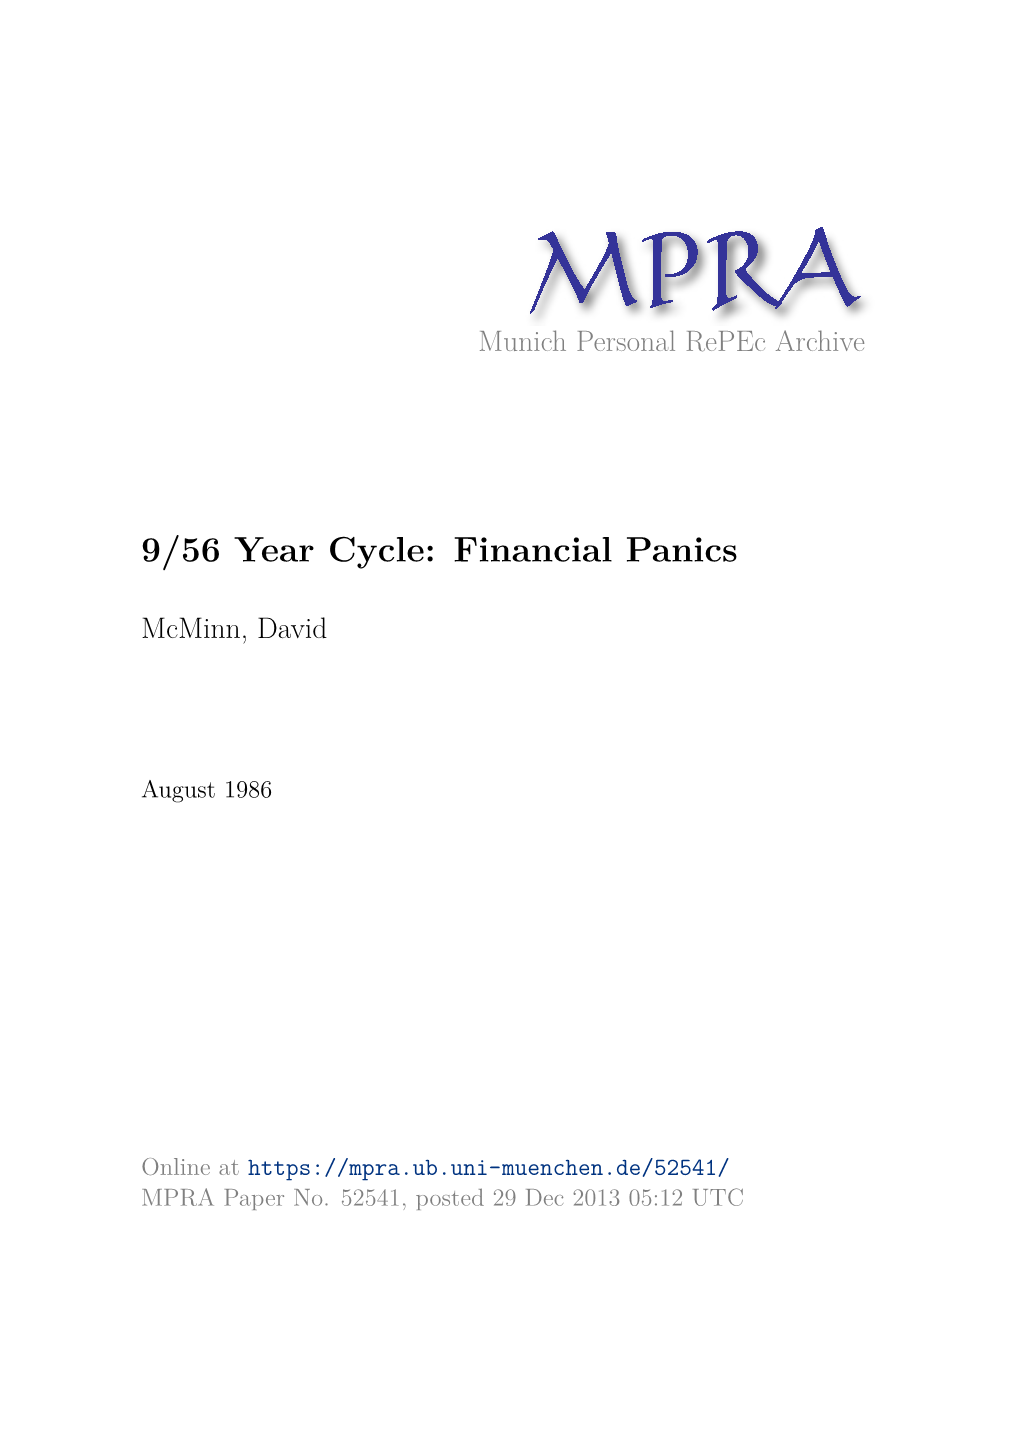 Financial Panics